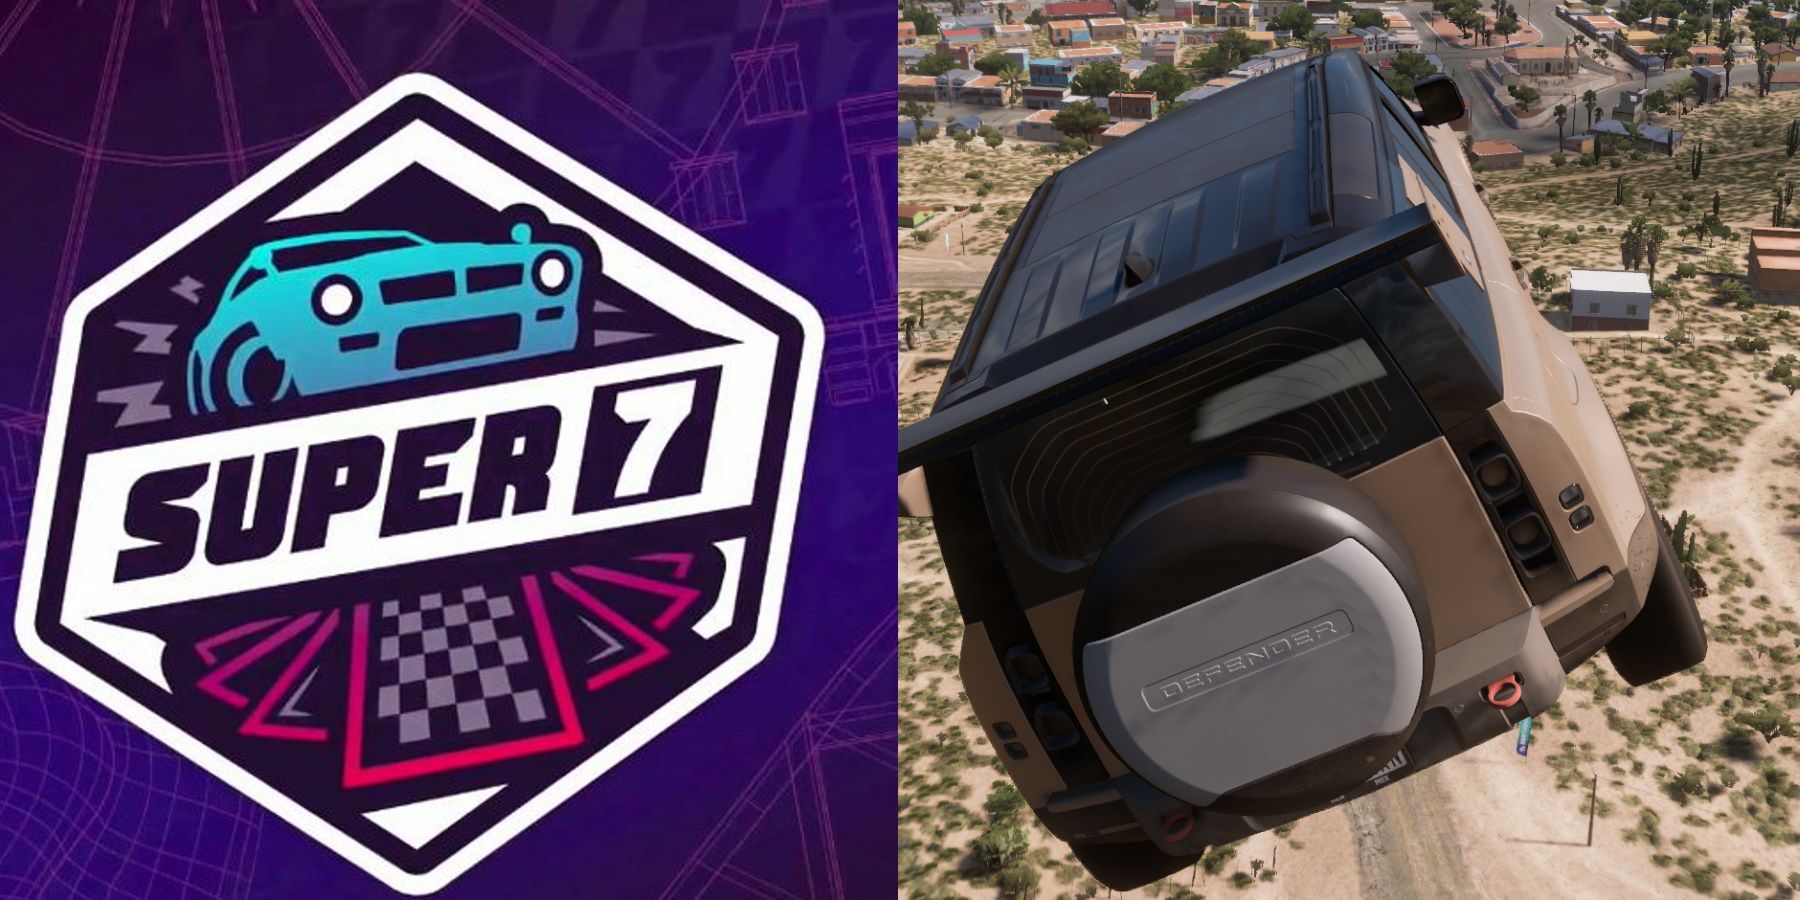 Forza Horizon 5 Super 7 Challenge logo and Defender Land Rover